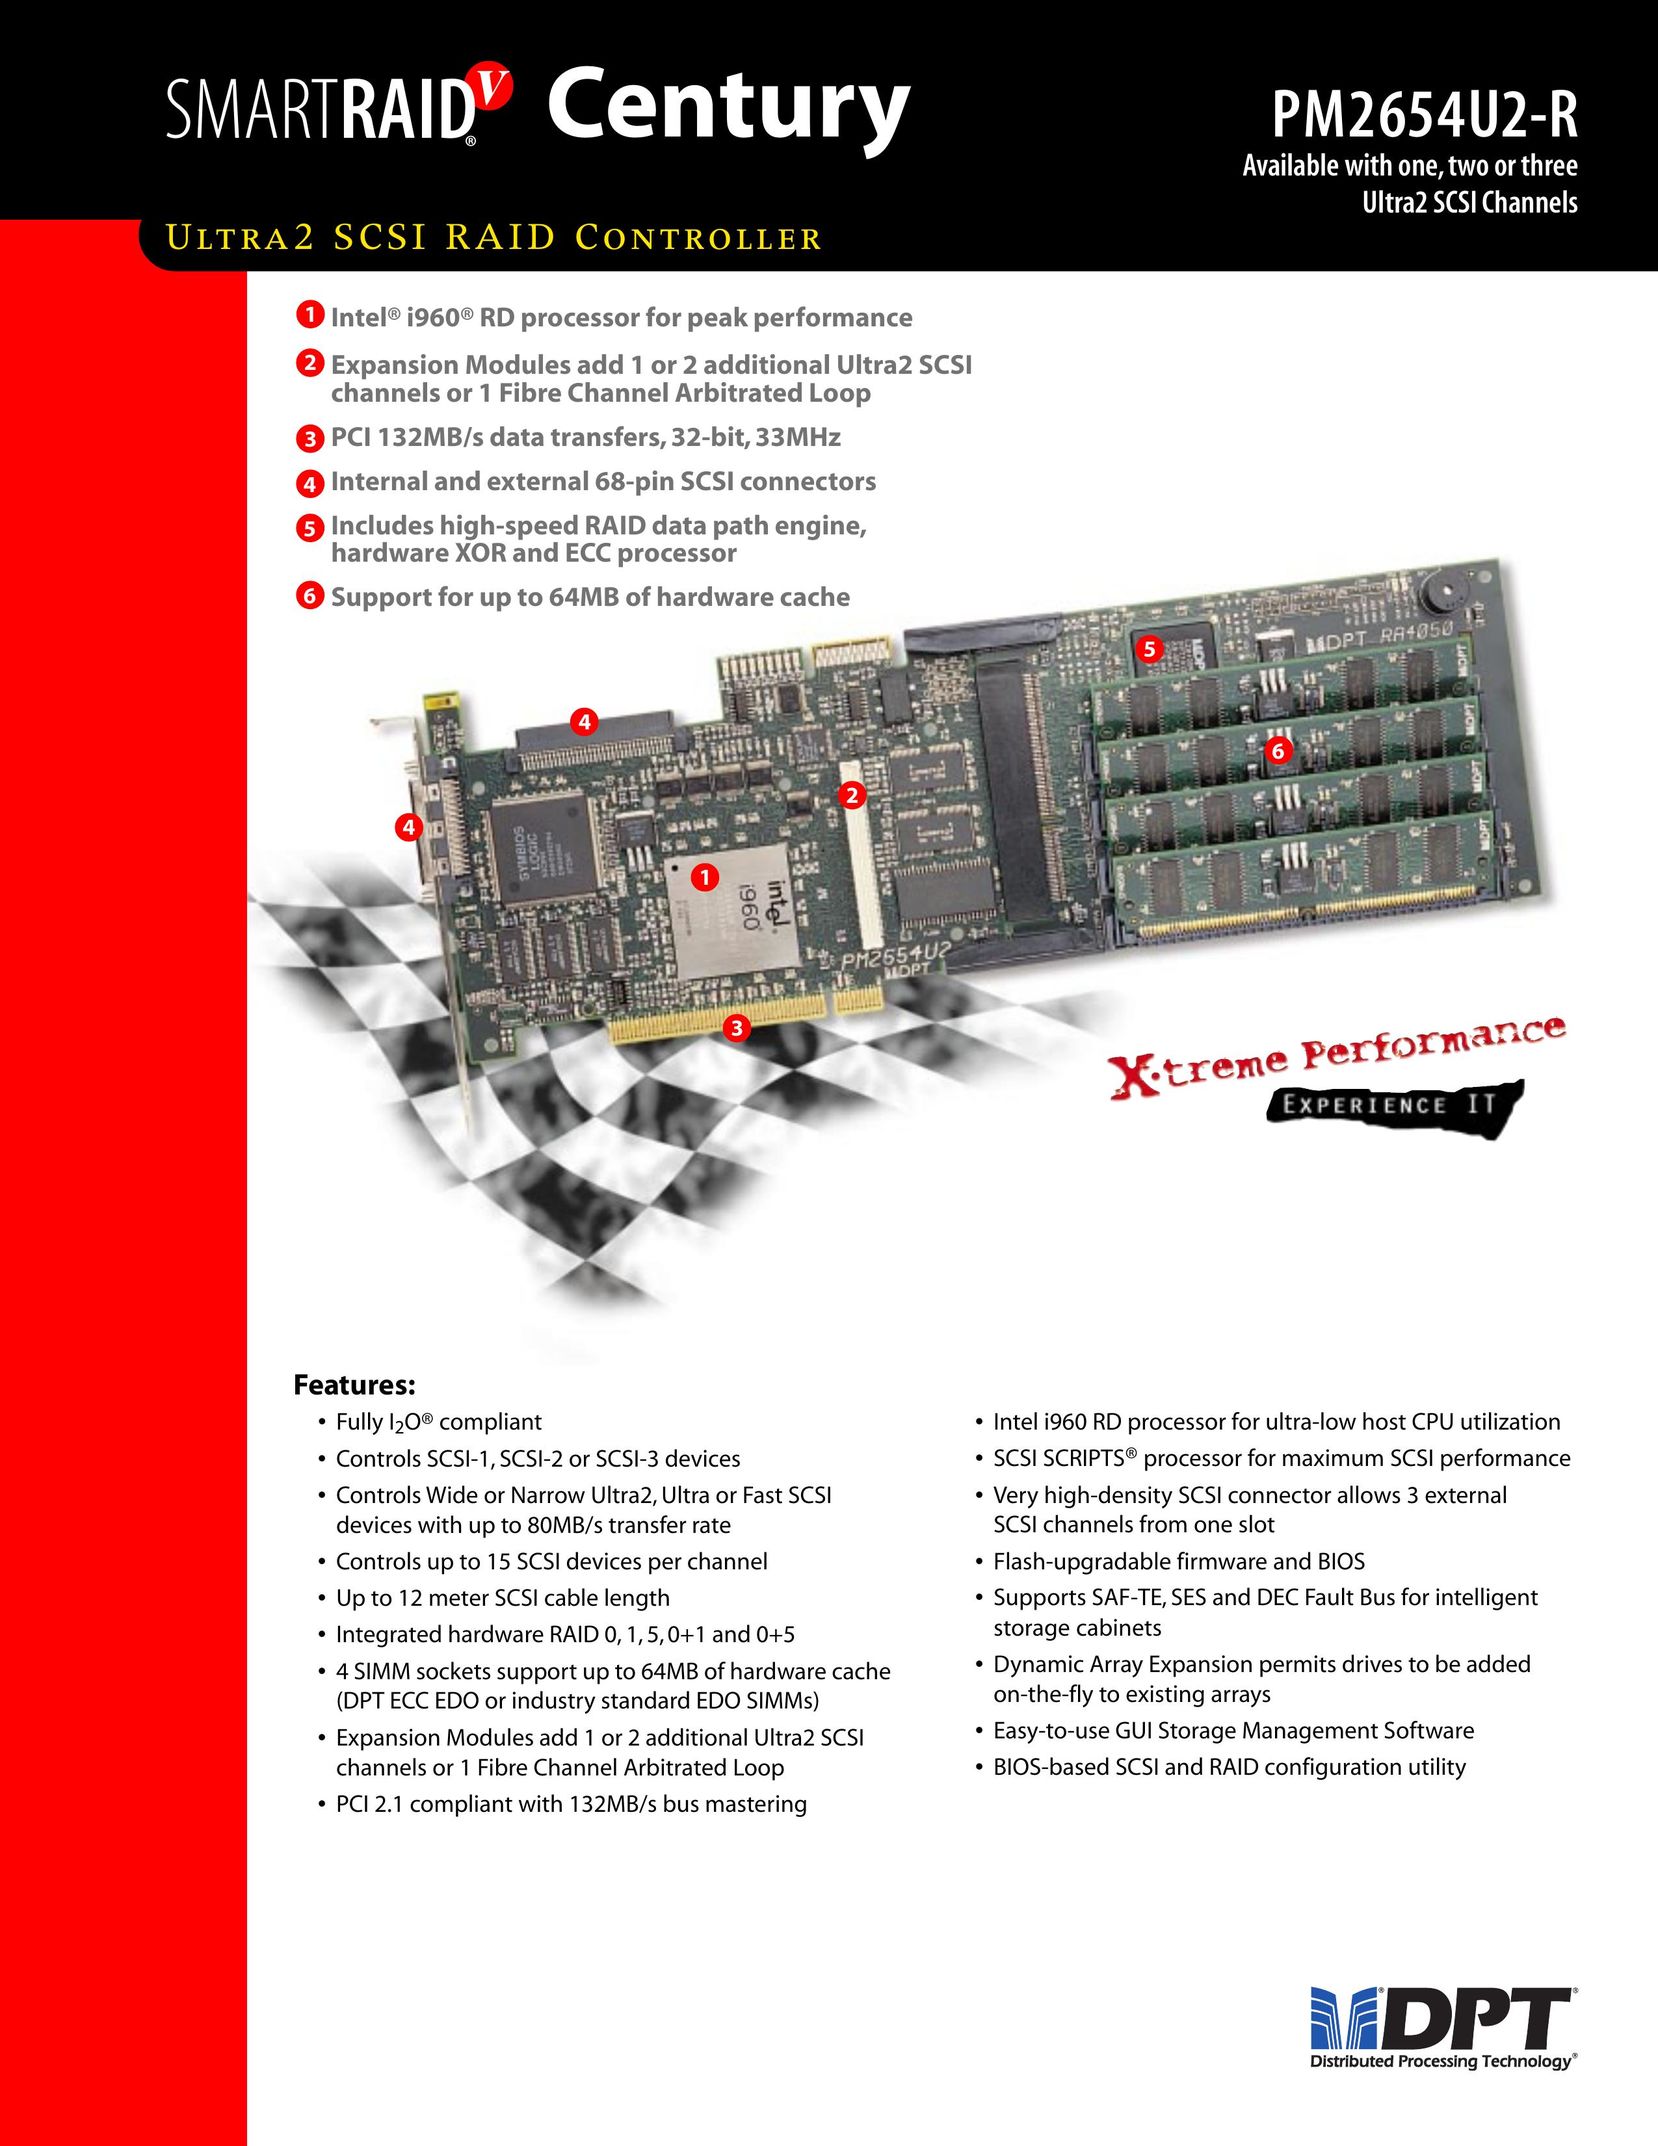 DPT PM2654U2-R Computer Hardware User Manual